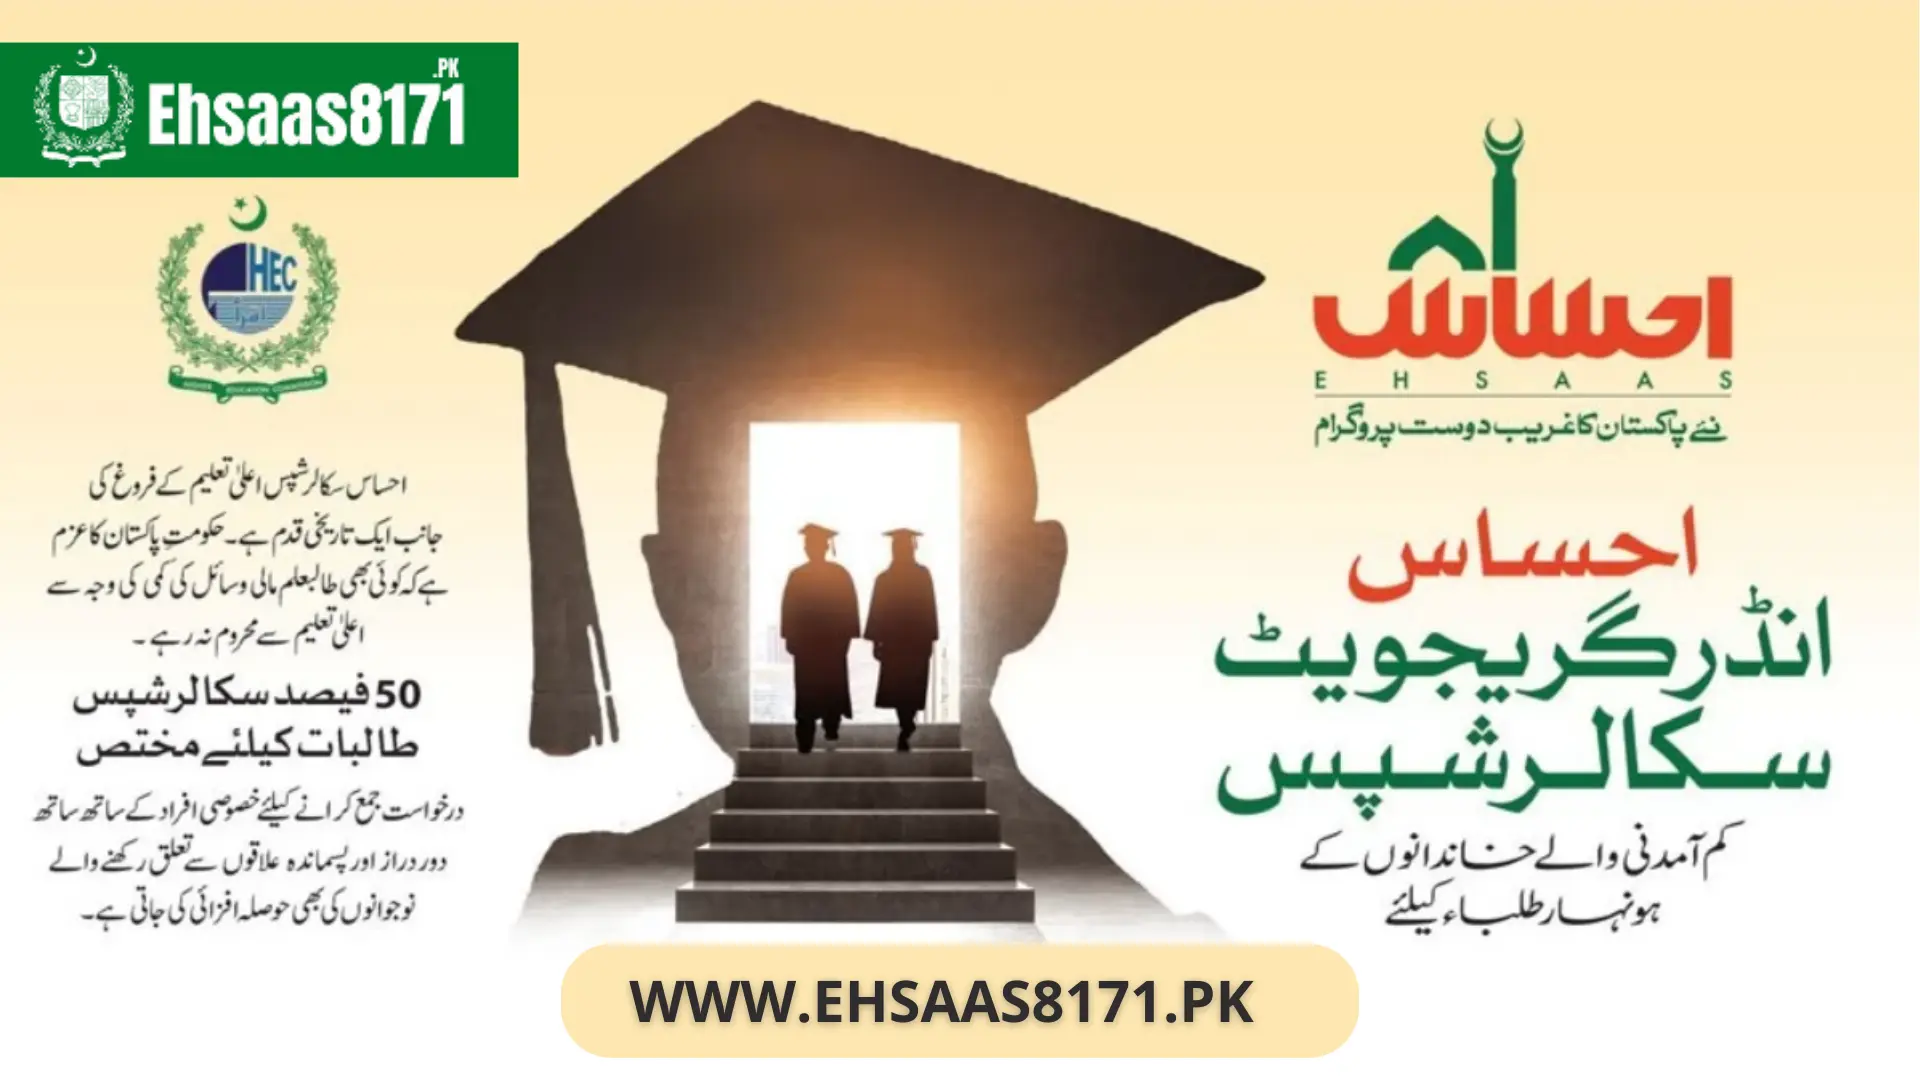 Ehsaas scholarship program in undergraduate level